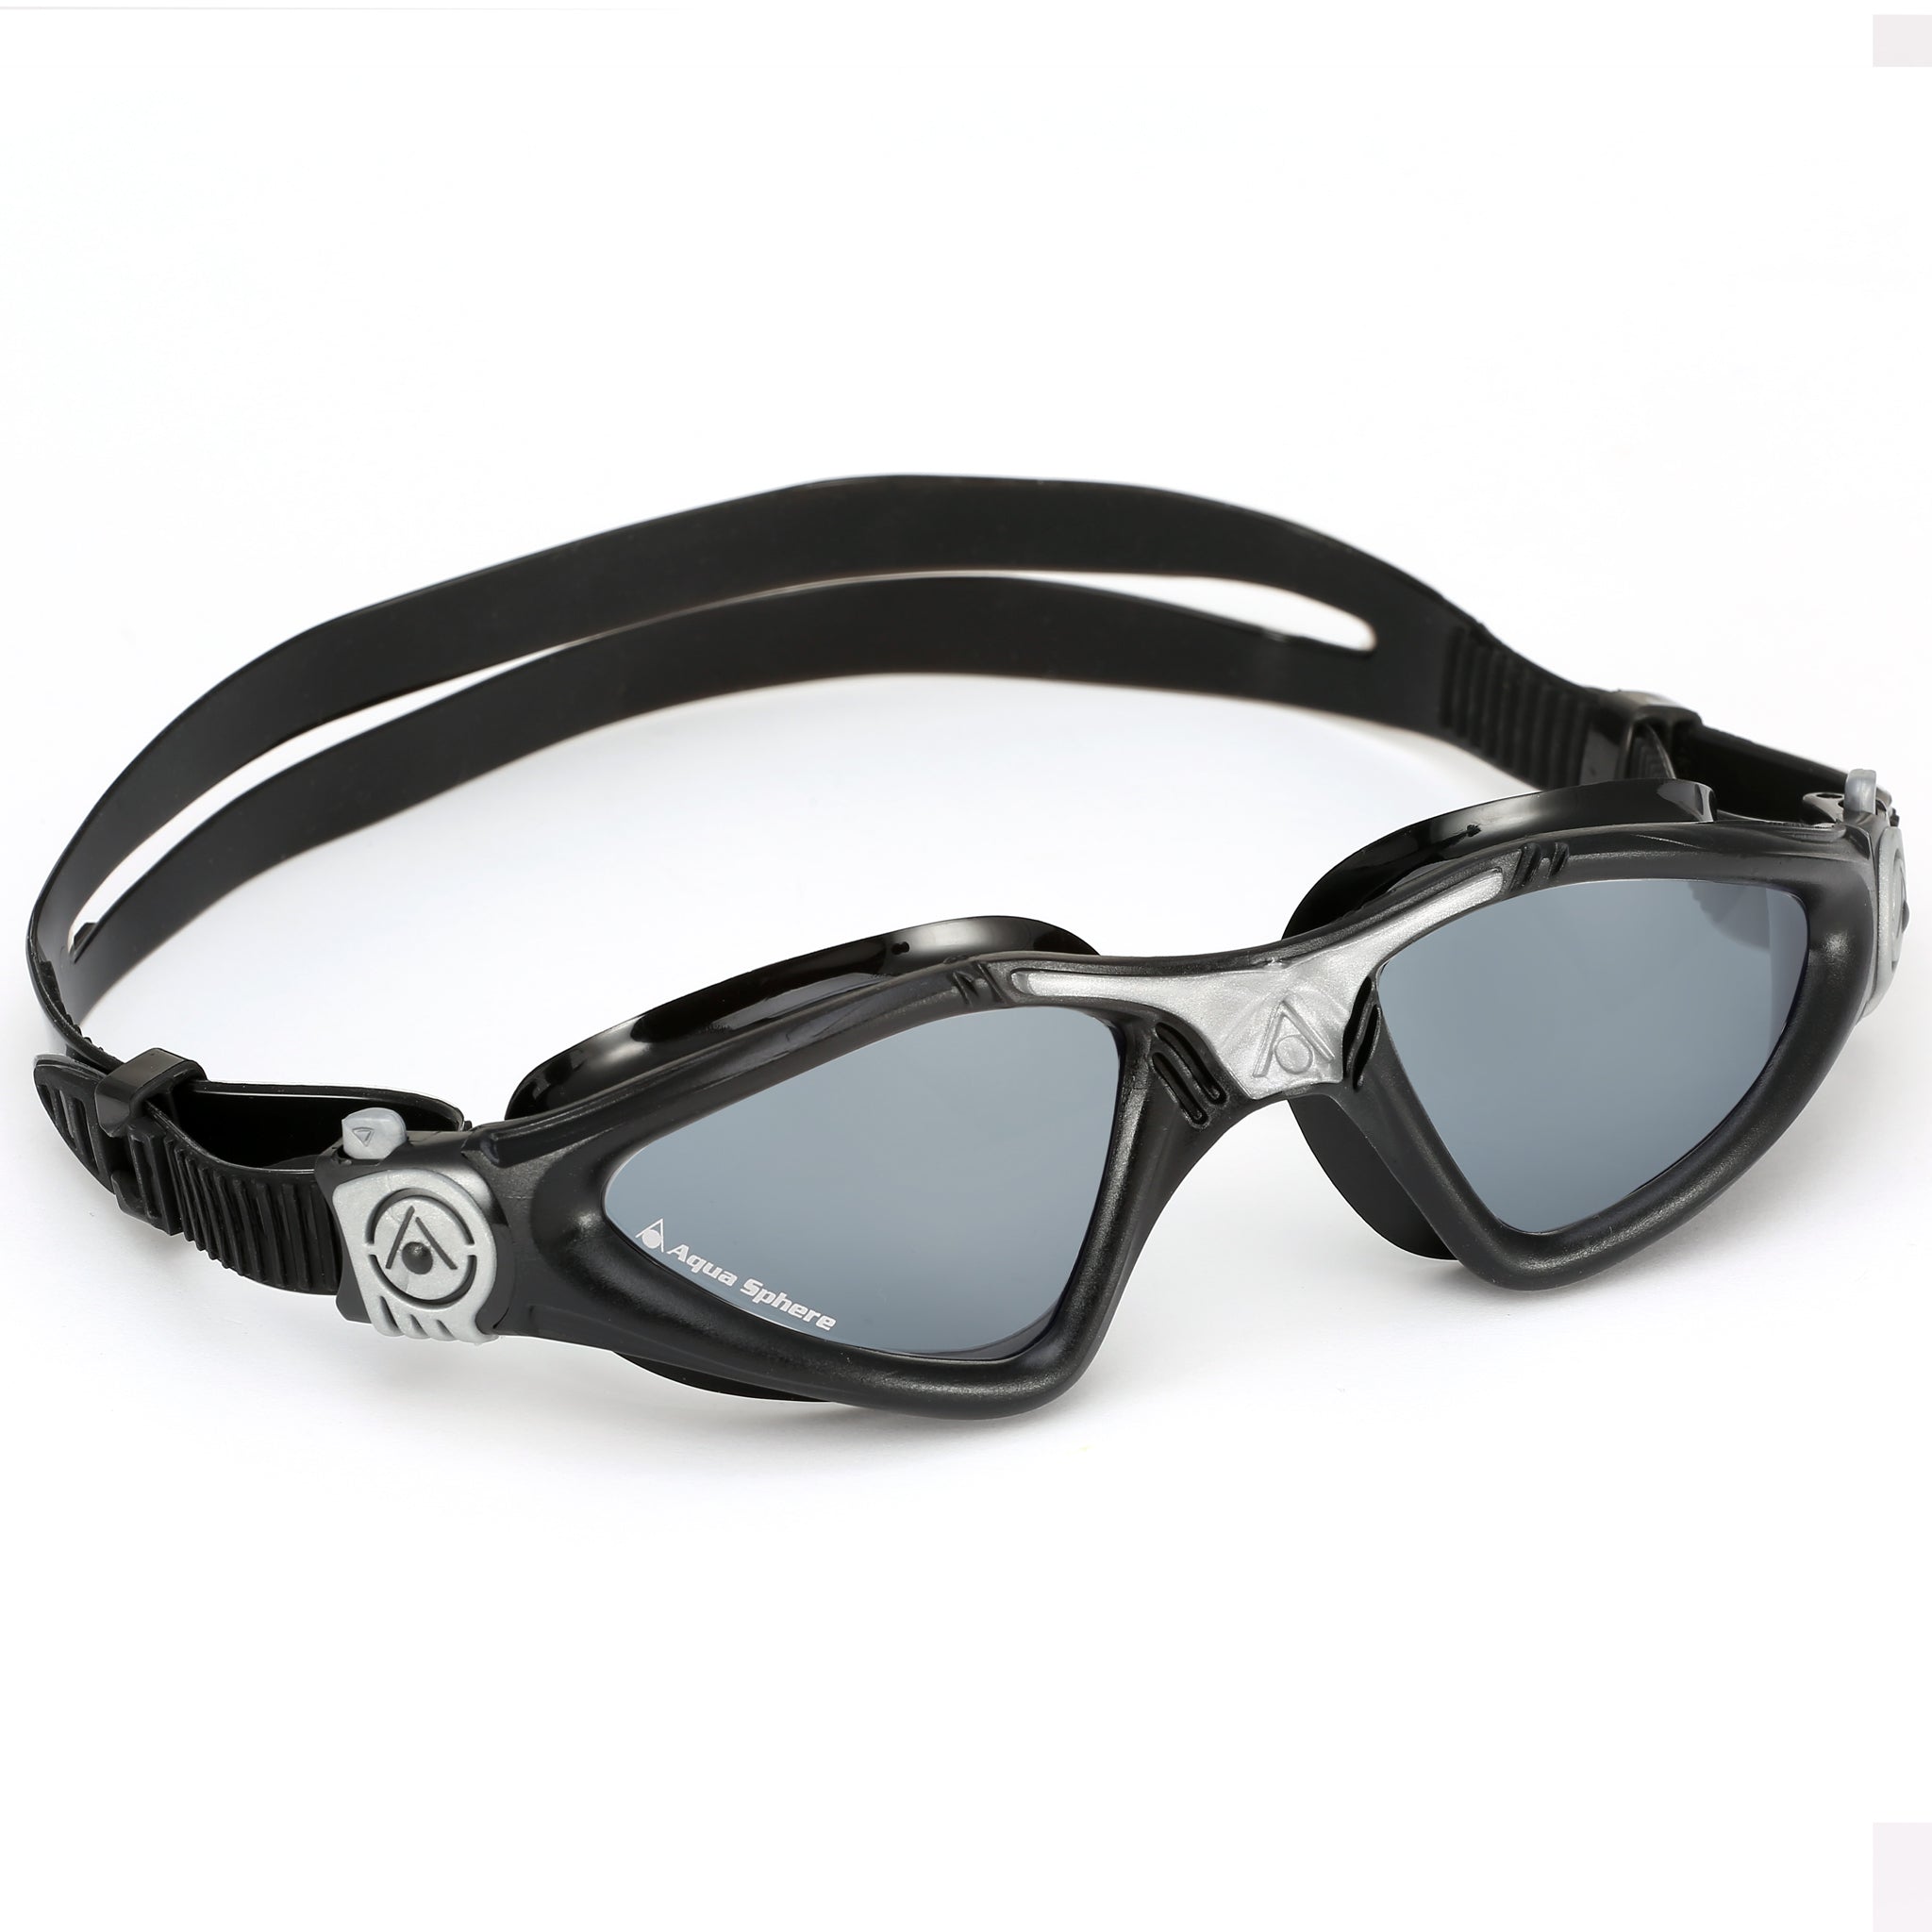 Aquasphere Kayenne Swimming Goggles Smoke Tinted Lenses | Black/Silver 